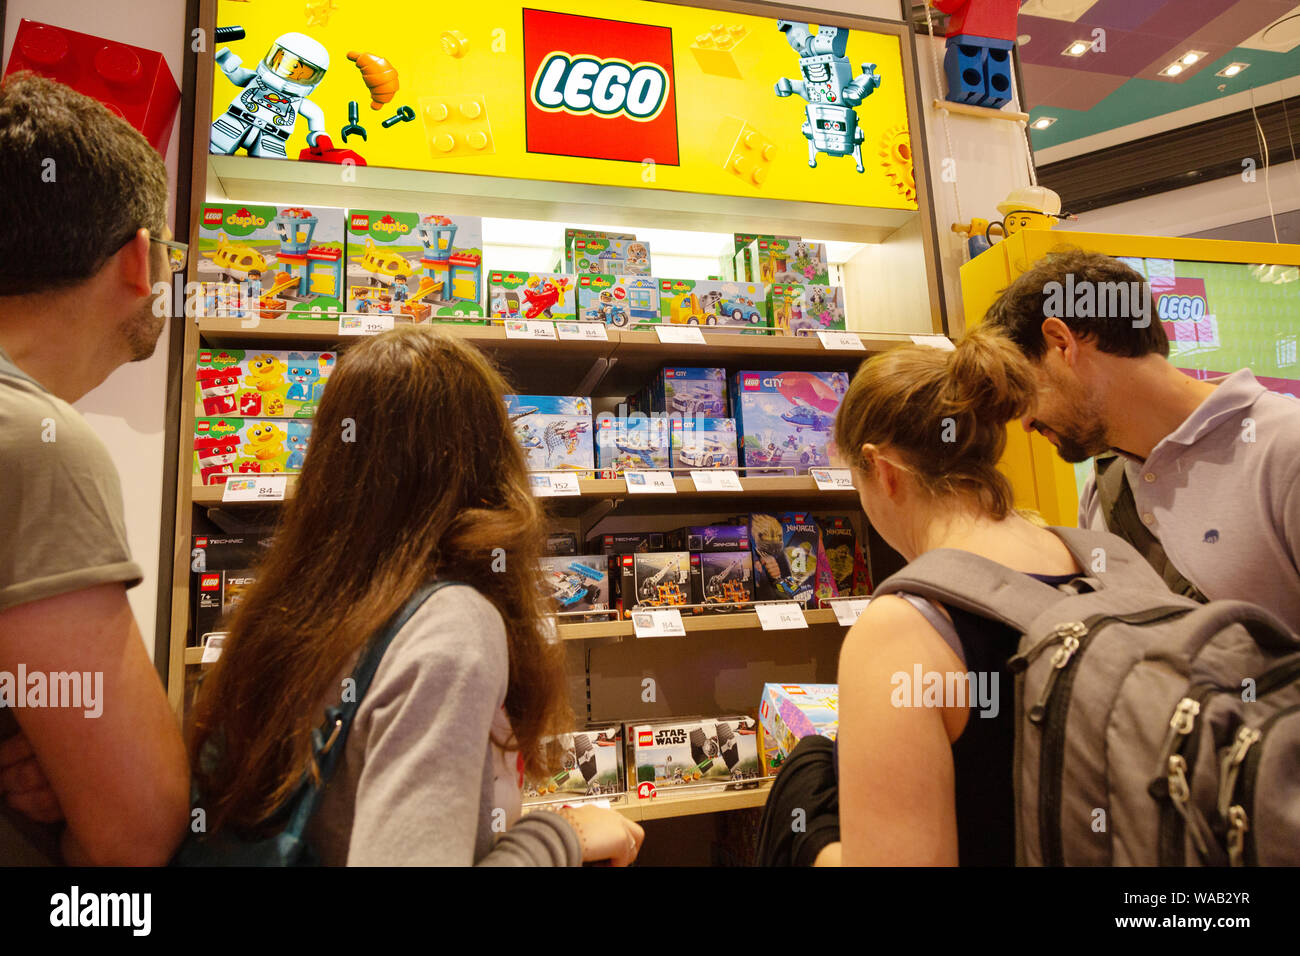 Lego Denmark - people buying lego at a lego shop, Copenhagen airport, Copenhagen, Denmark Scandinavia Stock Photo